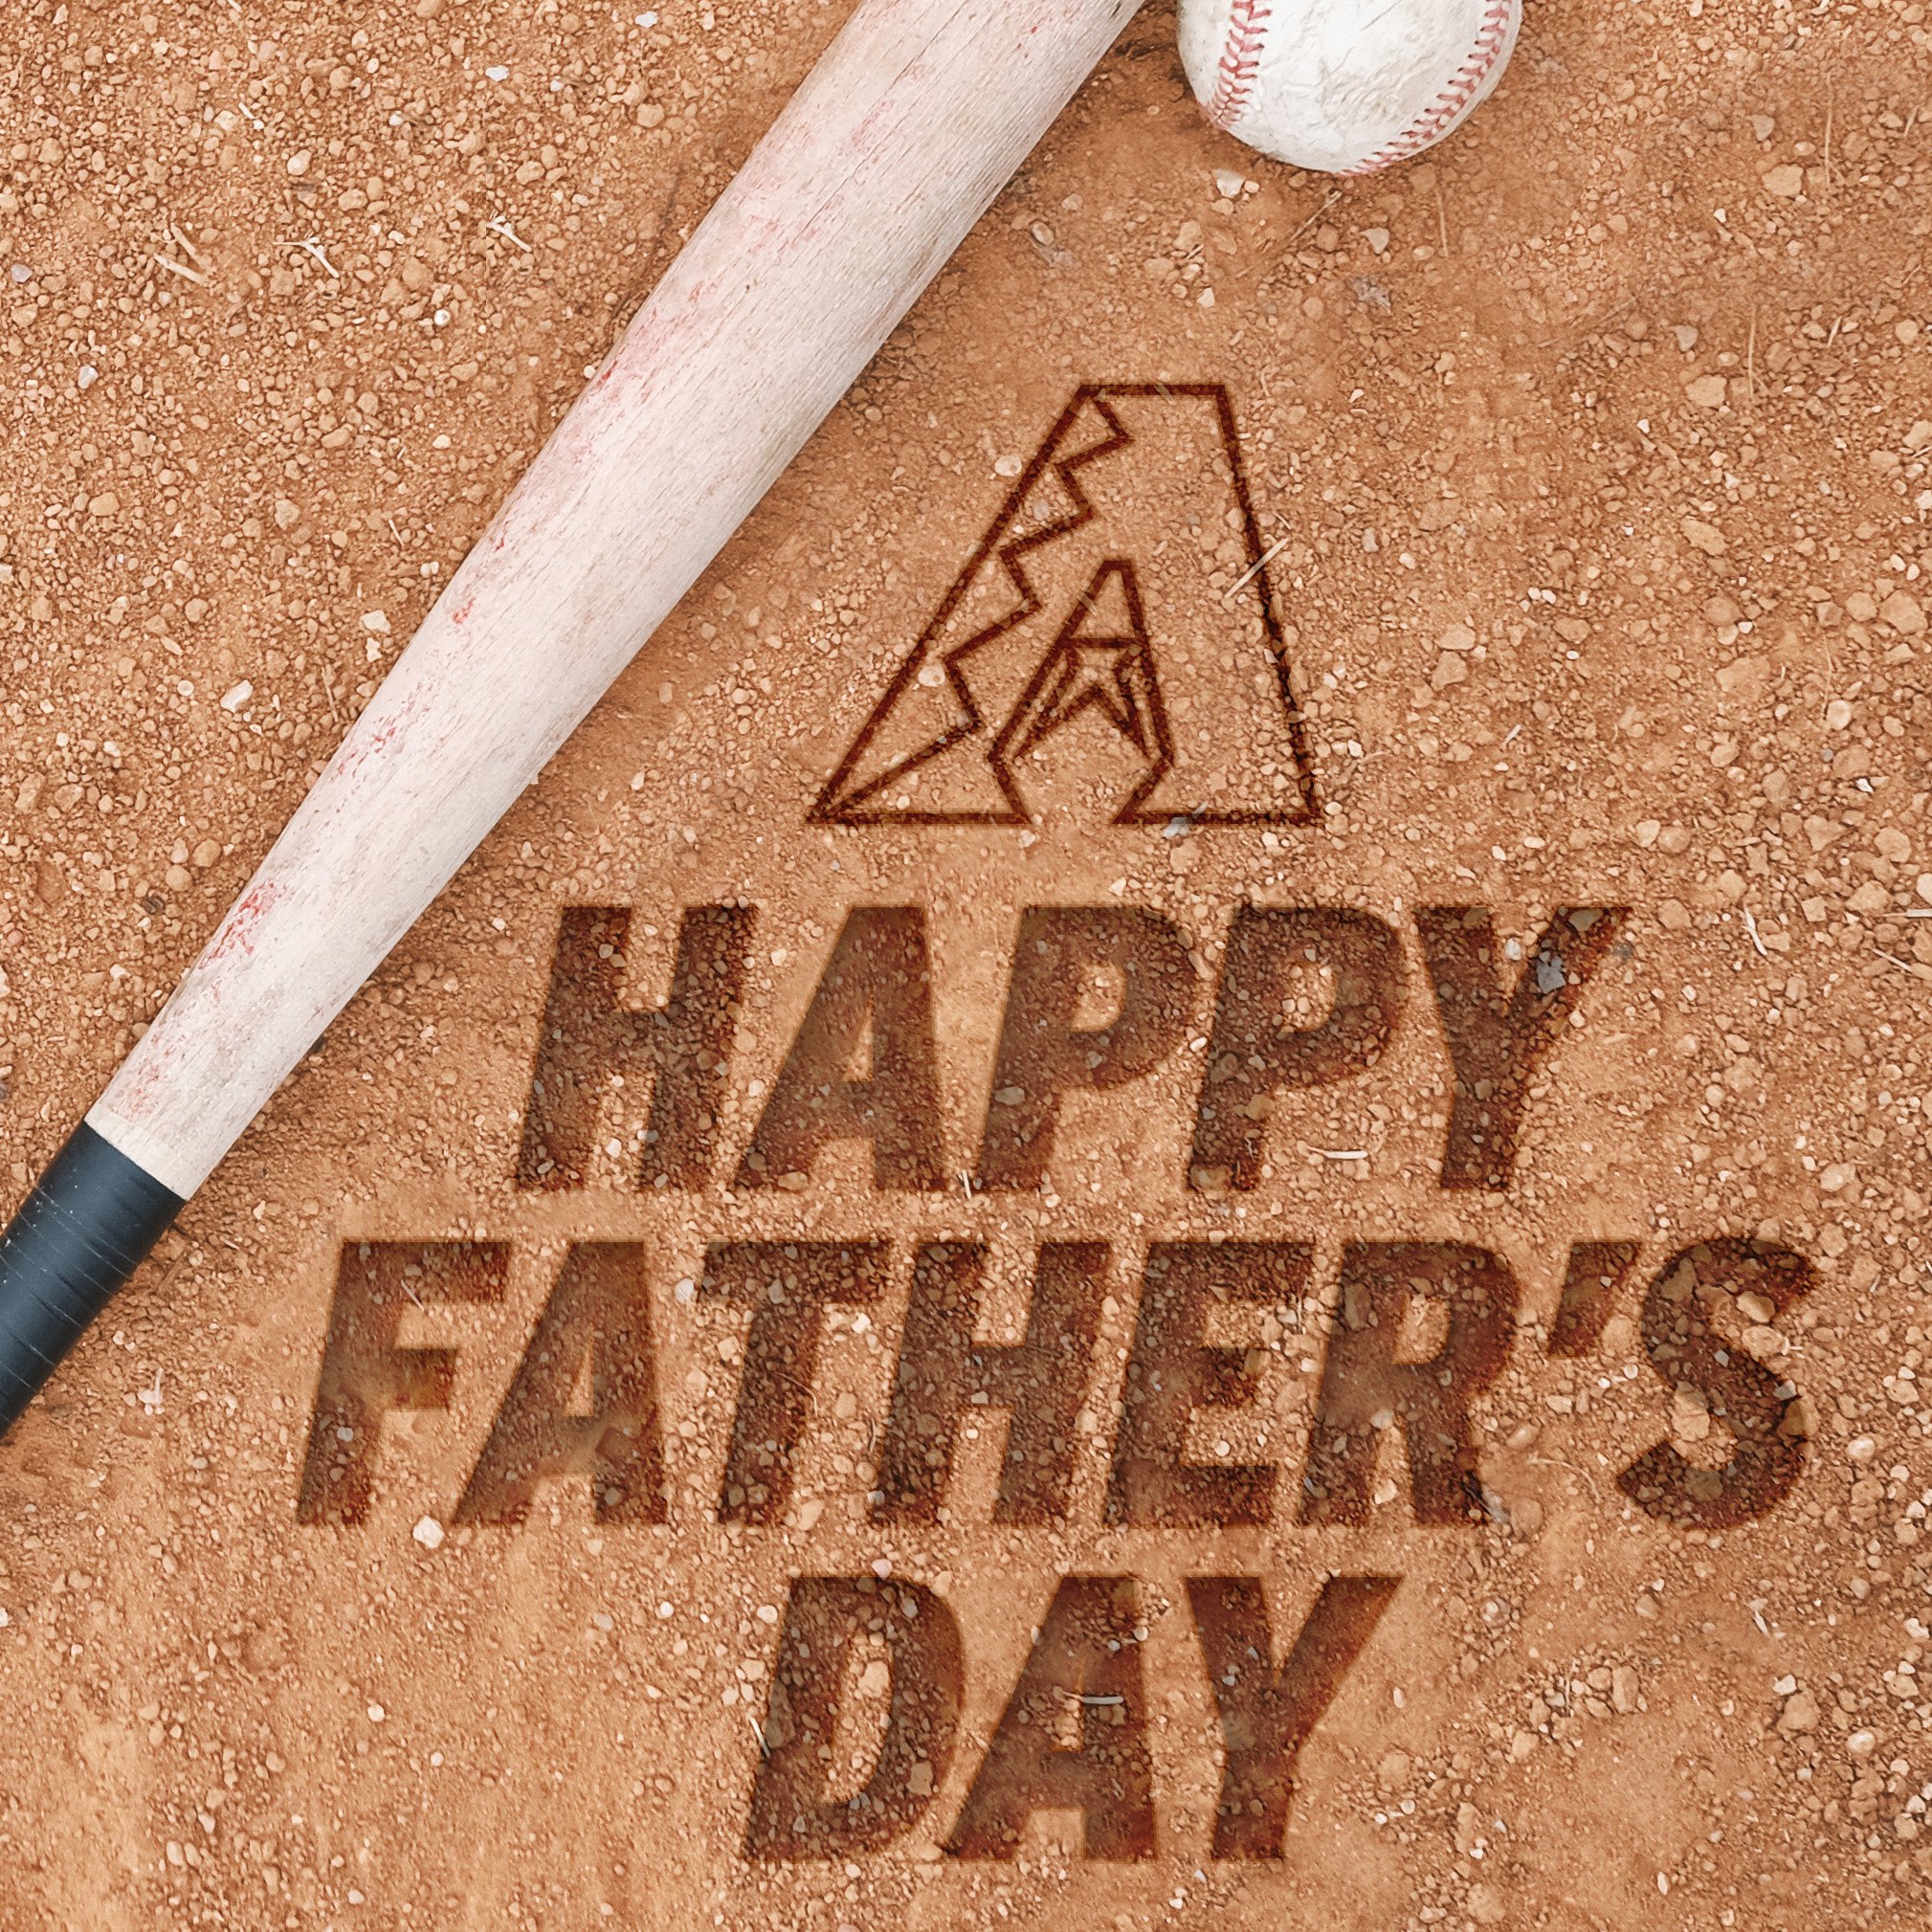 Arizona Diamondbacks on X: Happy #FathersDay to all the #Dbacks dads out  there!  / X